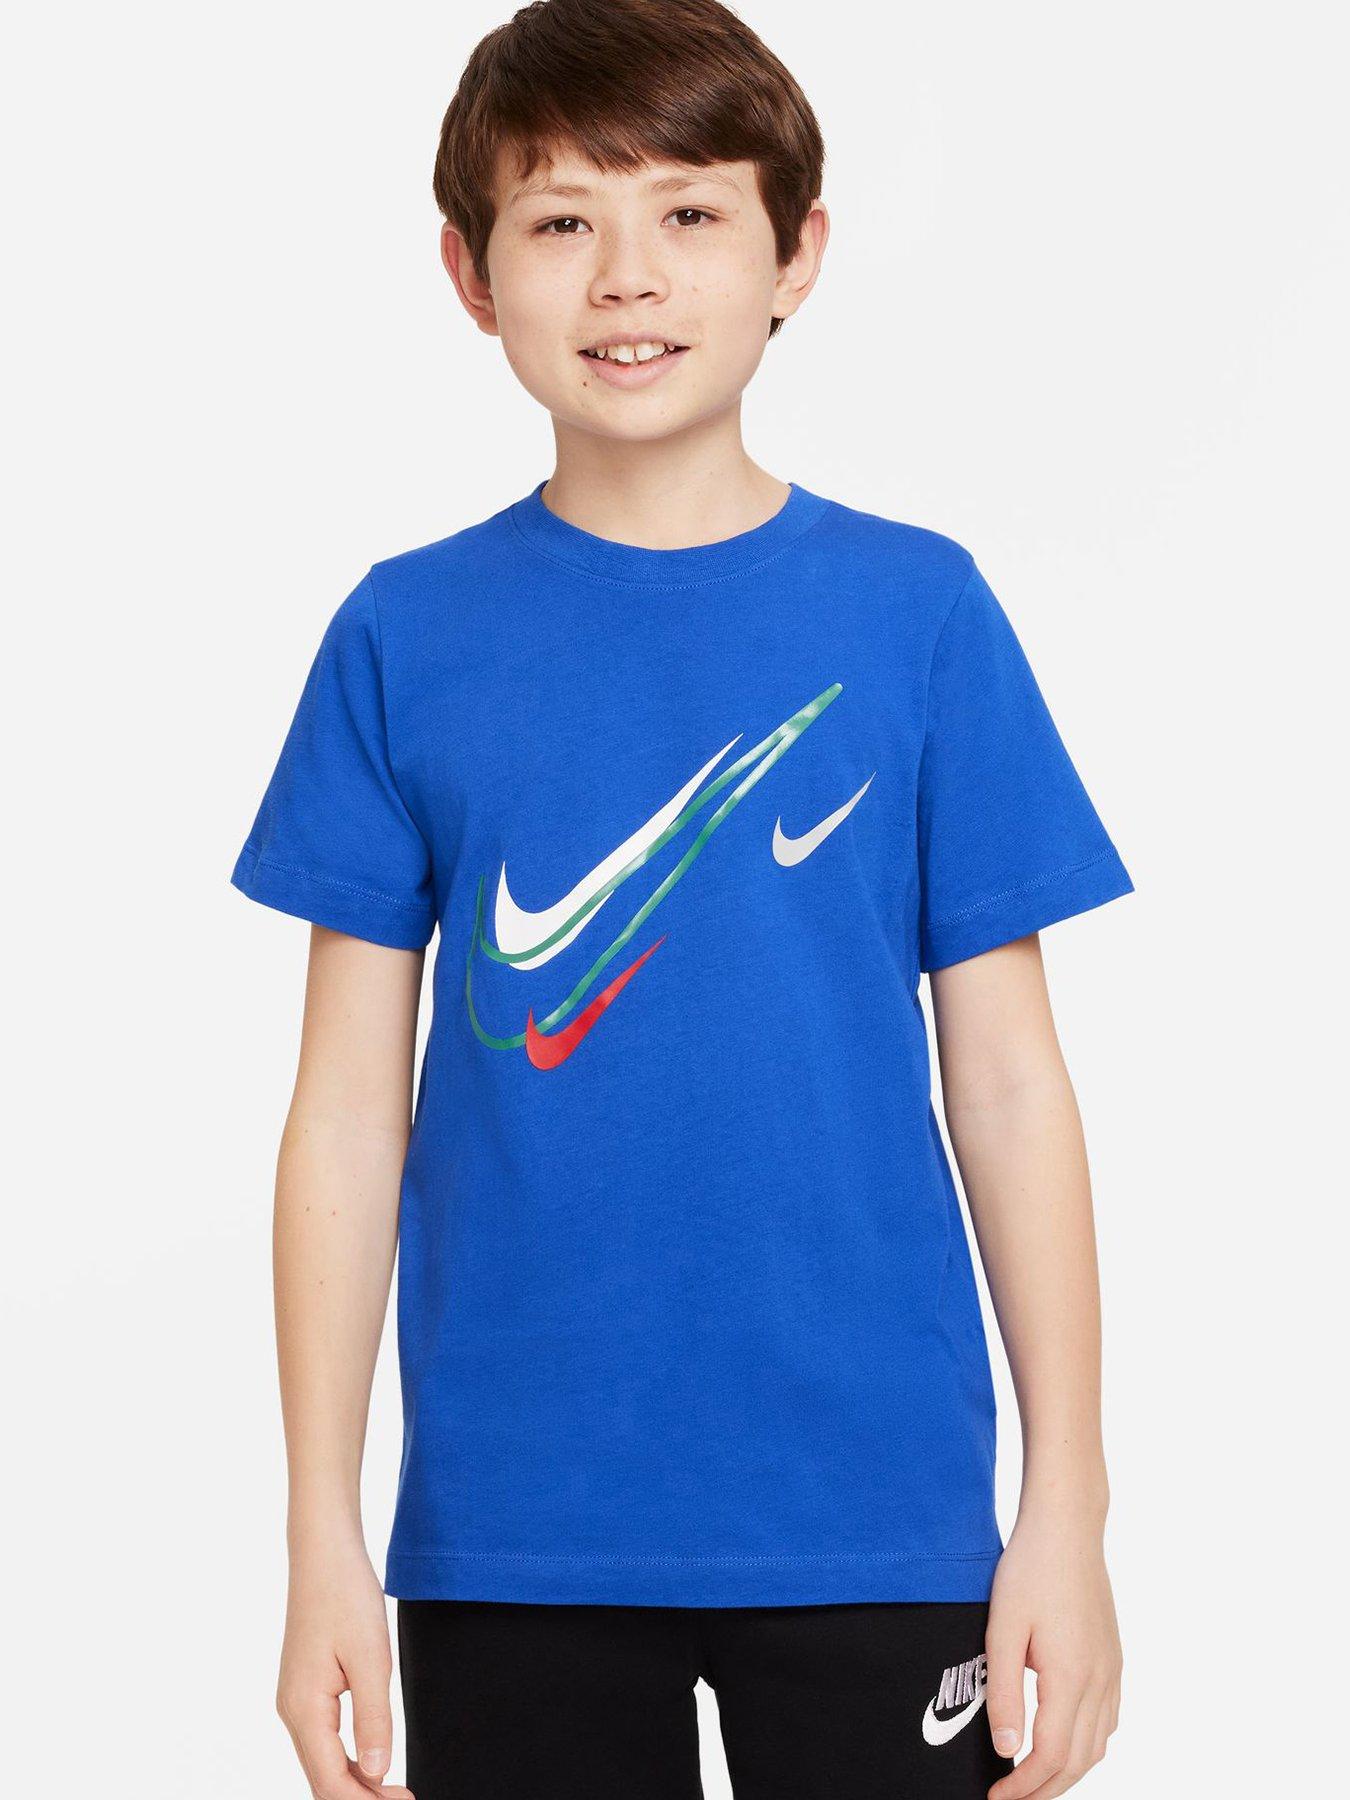 More Mile Marl Boys Short Sleeve Running Top Kids Stylish Sports T-Shirt 